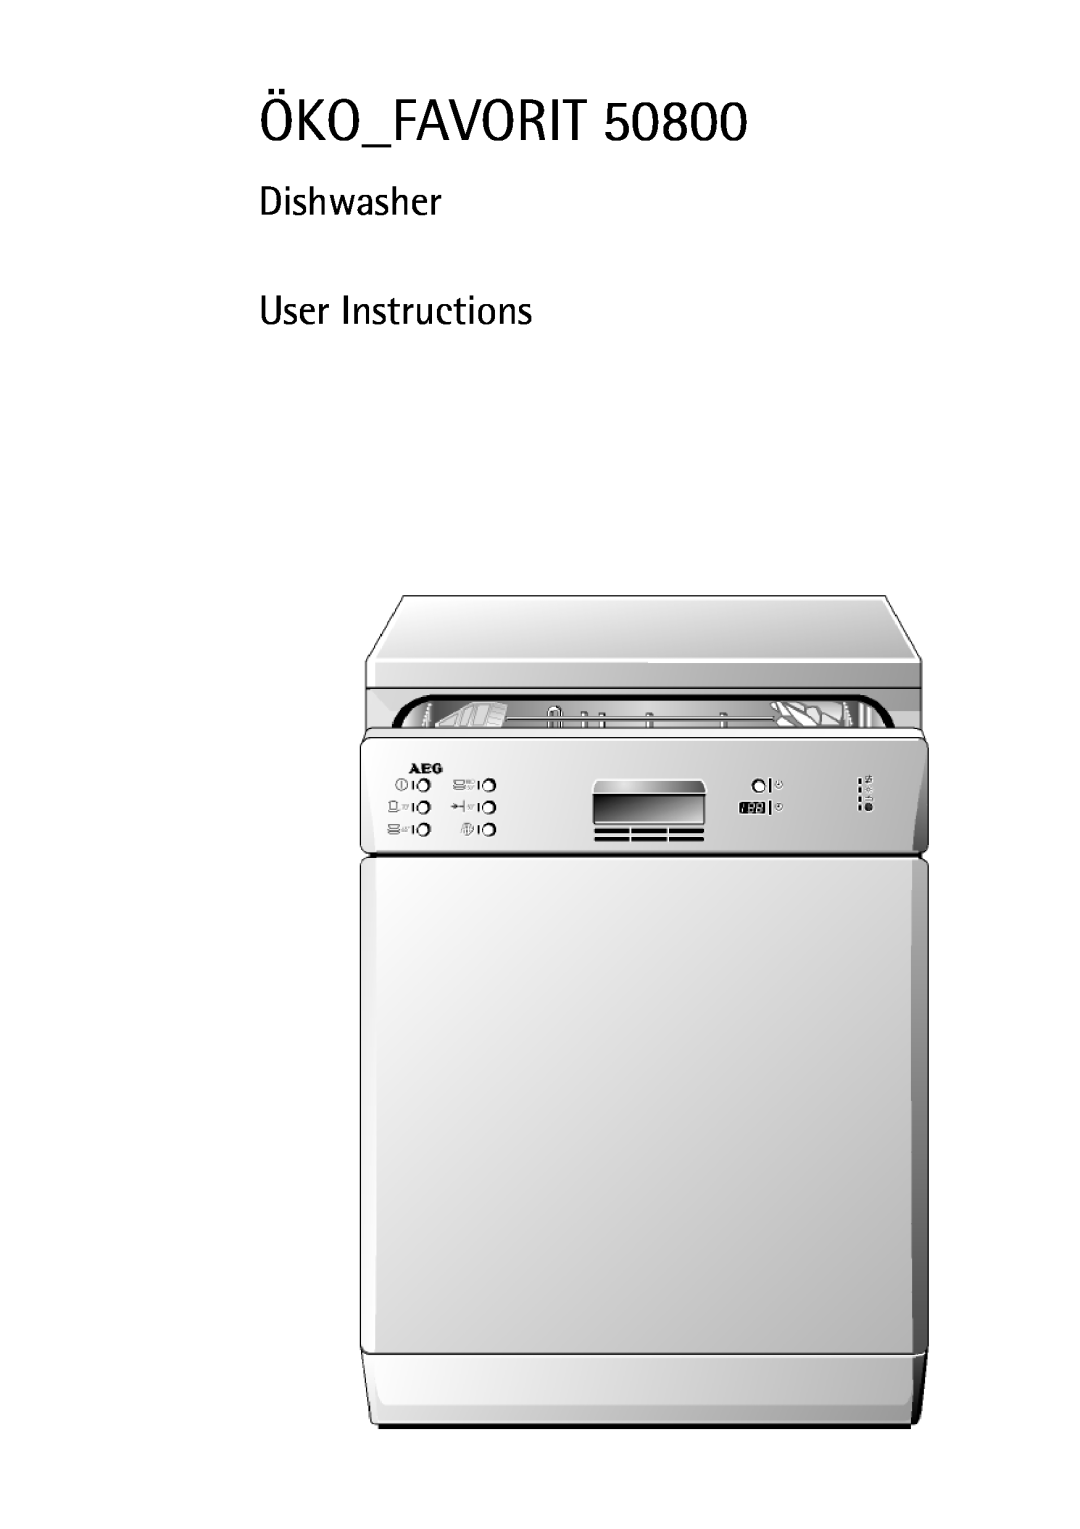 AEG 50800 manual Öko Favorit, Dishwasher User Instructions 